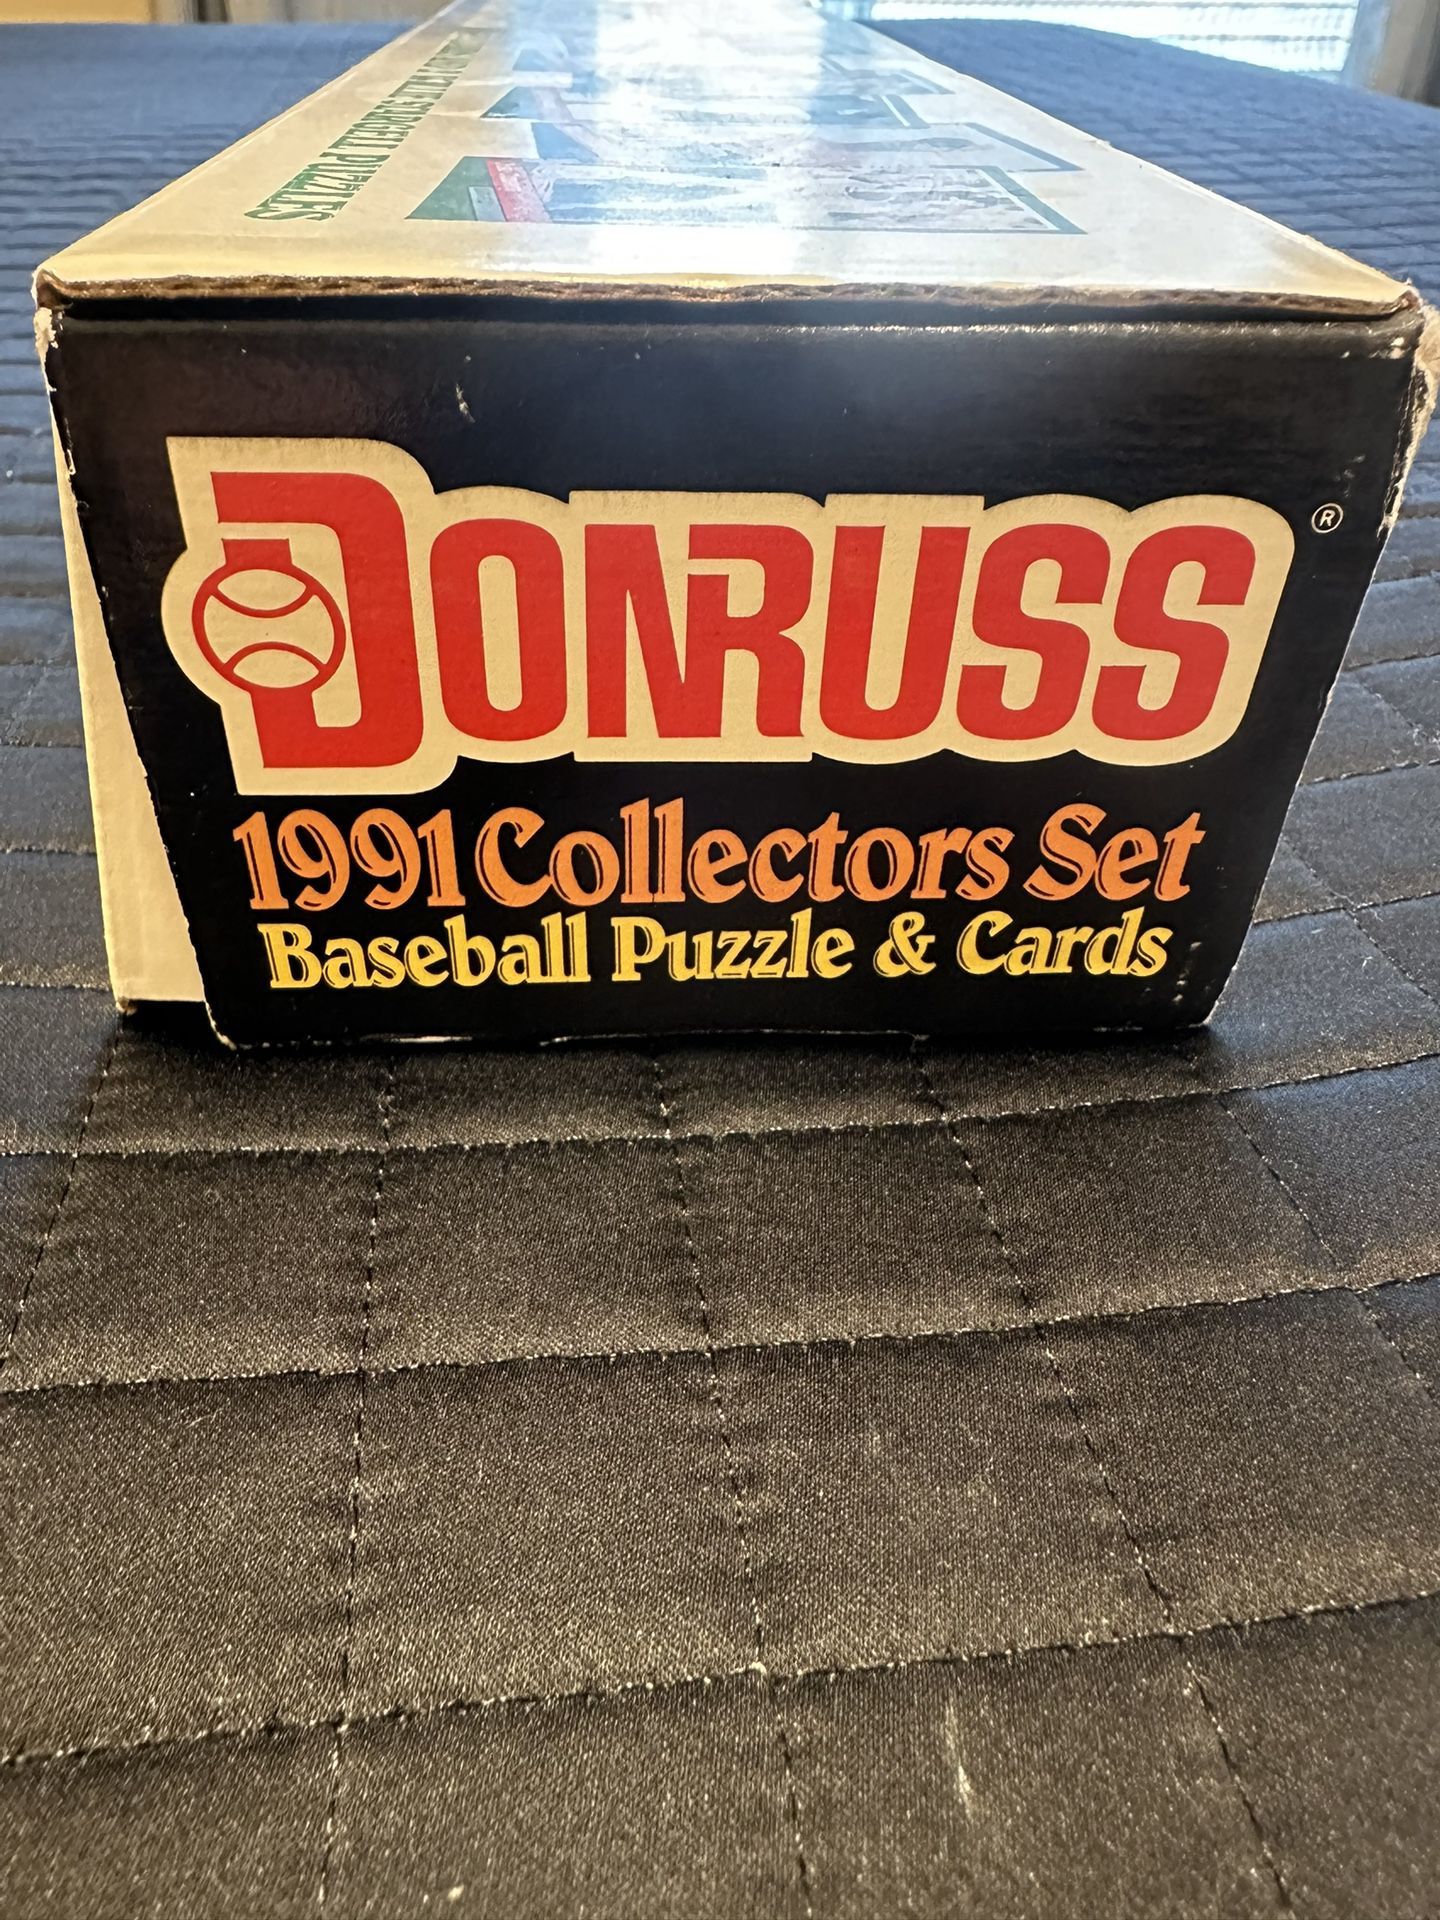 Donruss 1991 Baseball Card Set With Puzzles